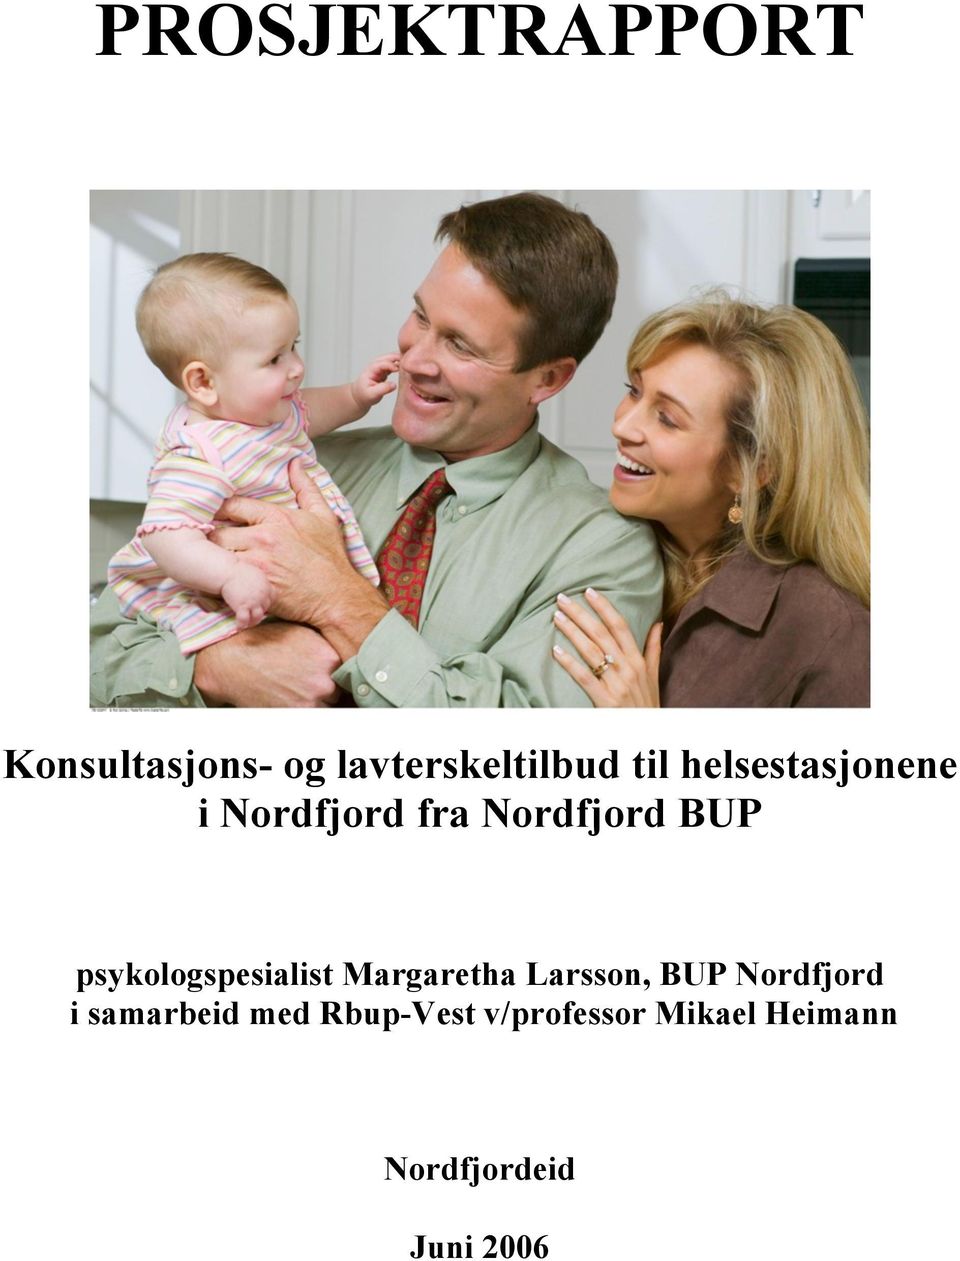 psykologspesialist Margaretha Larsson, BUP Nordfjord i